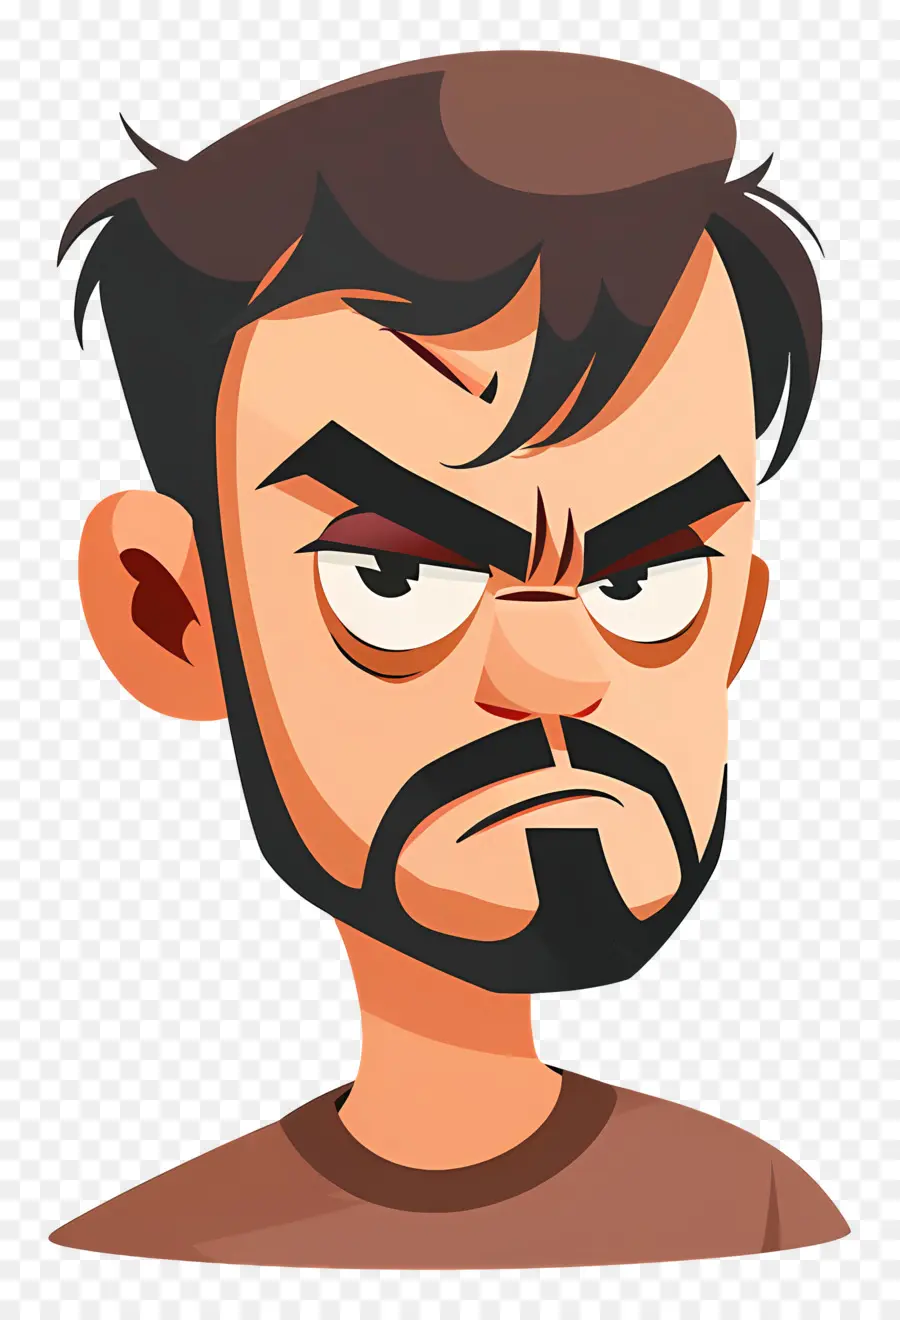 eye roll annoyed stern expression man with beard mid twenties